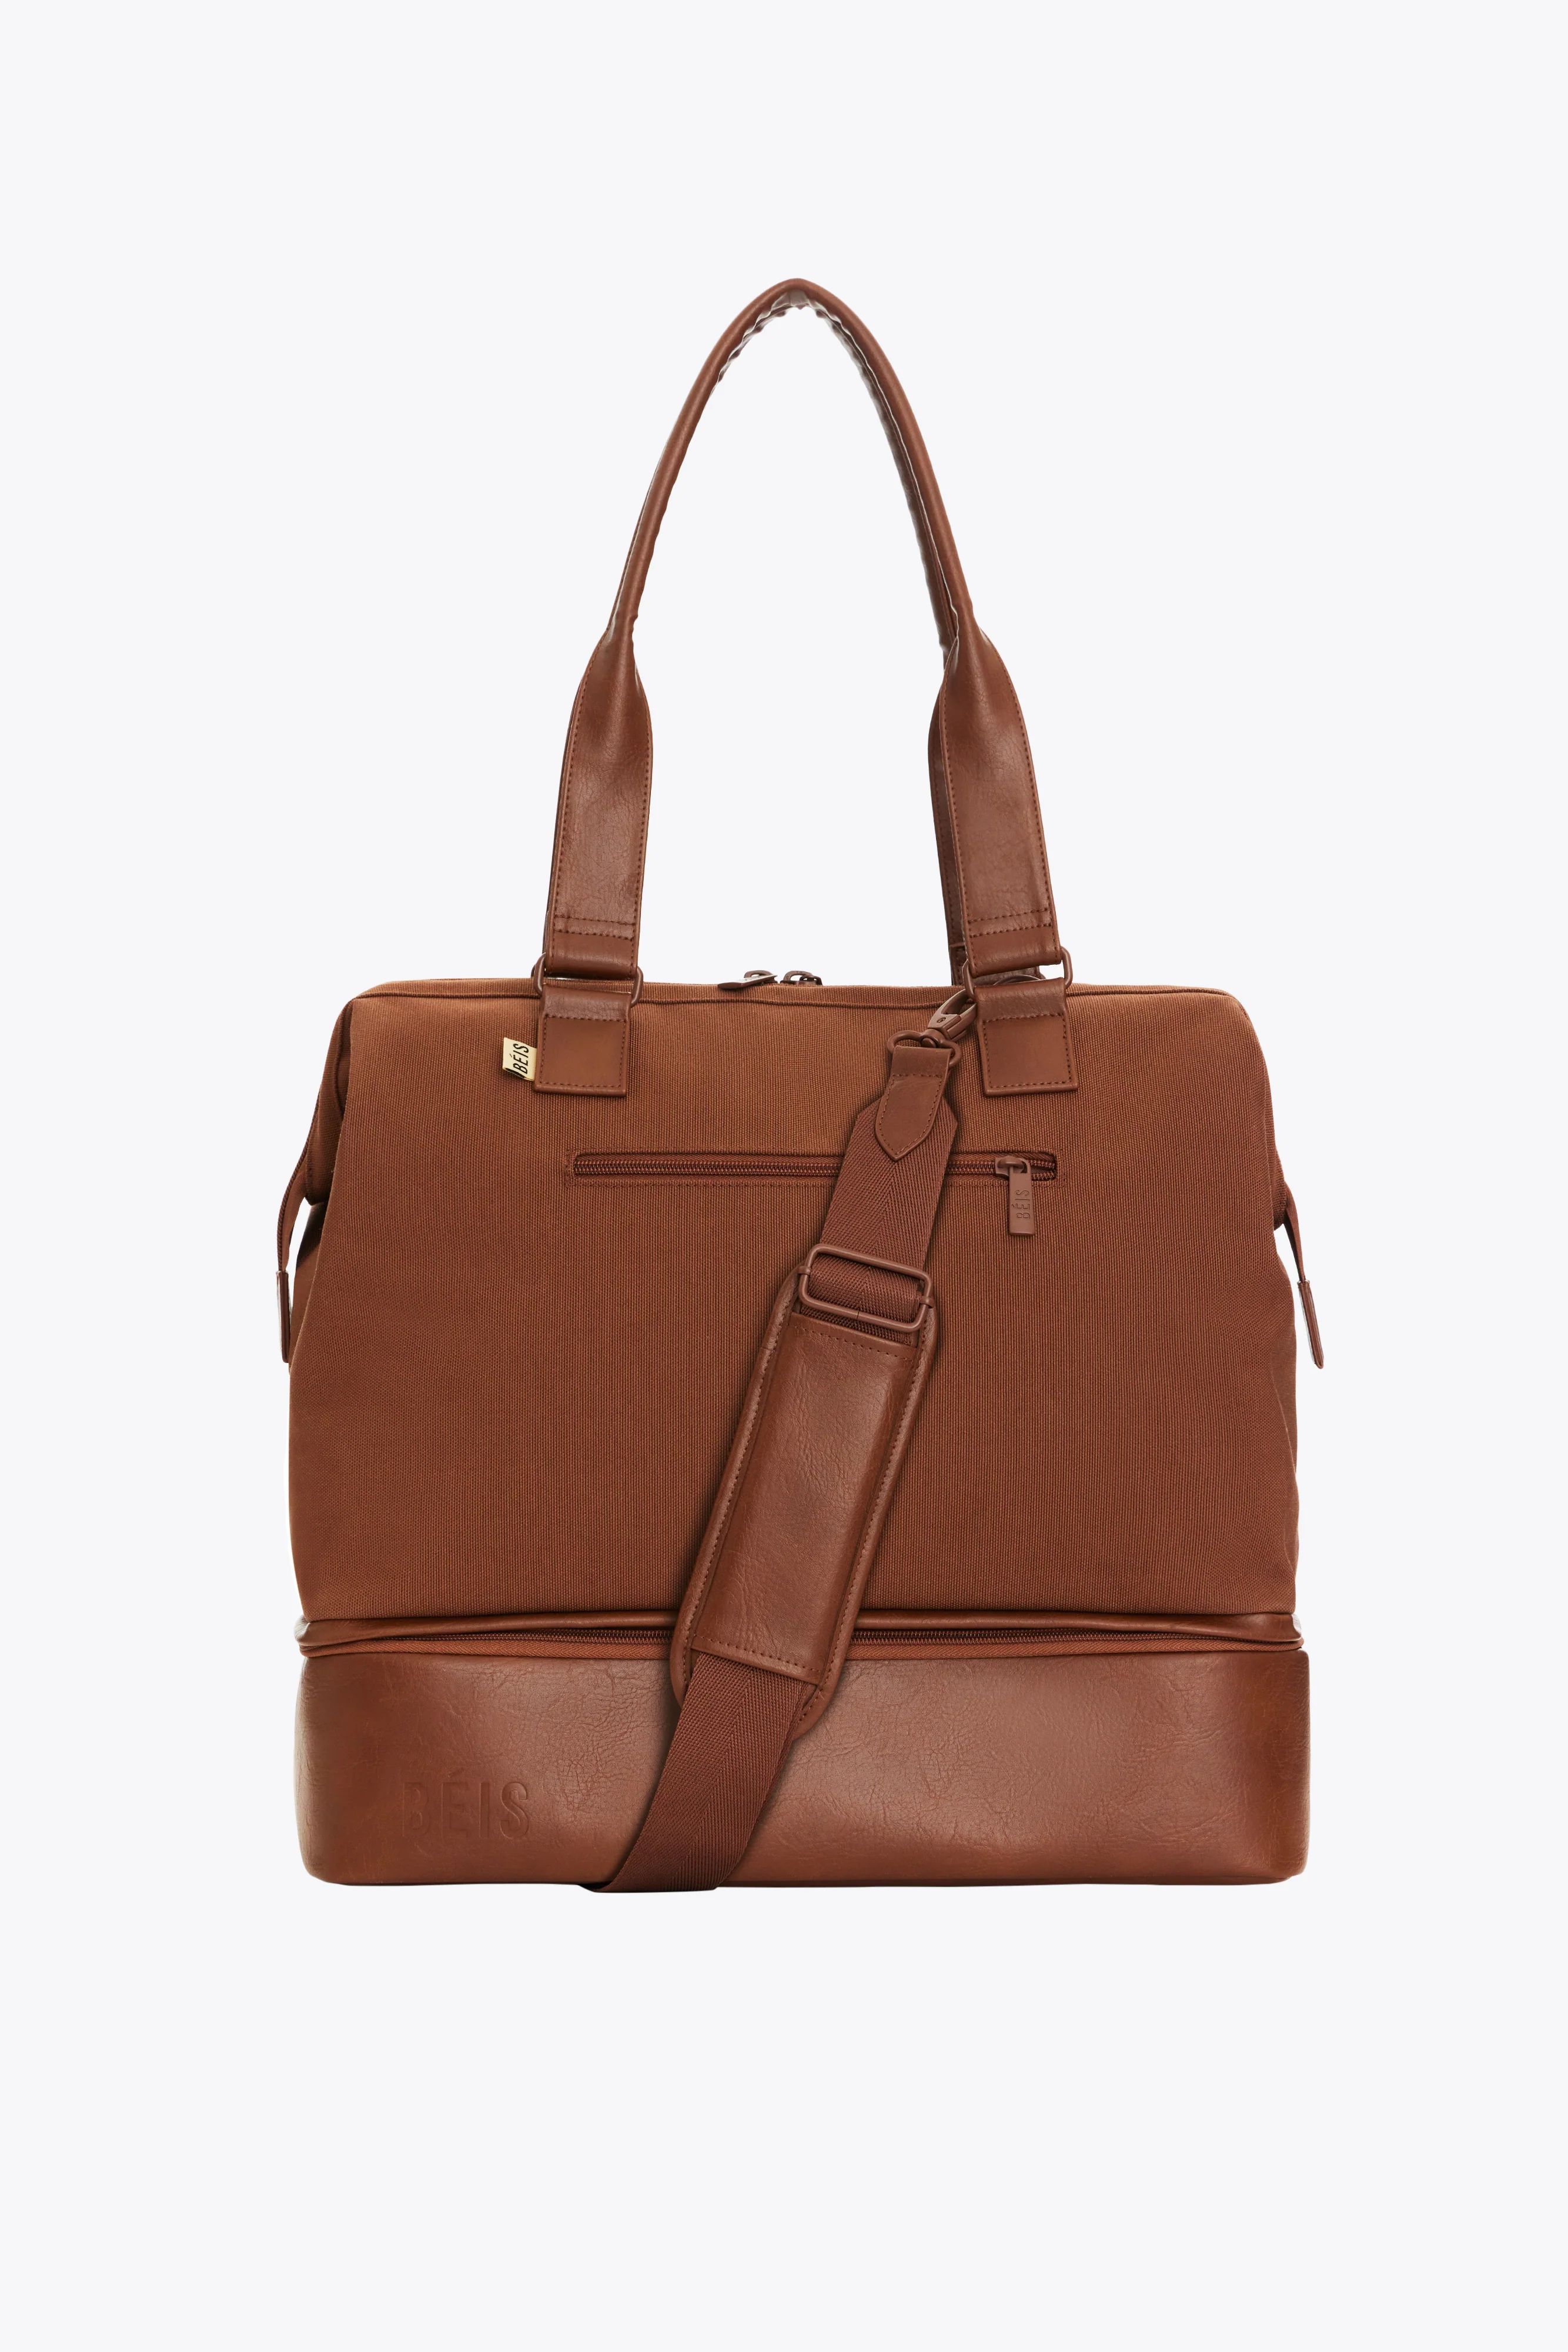 BÉIS 'The Convertible Mini Weekender' in Maple - Small Overnight Bag & Brown Duffle Bag | BÉIS Travel